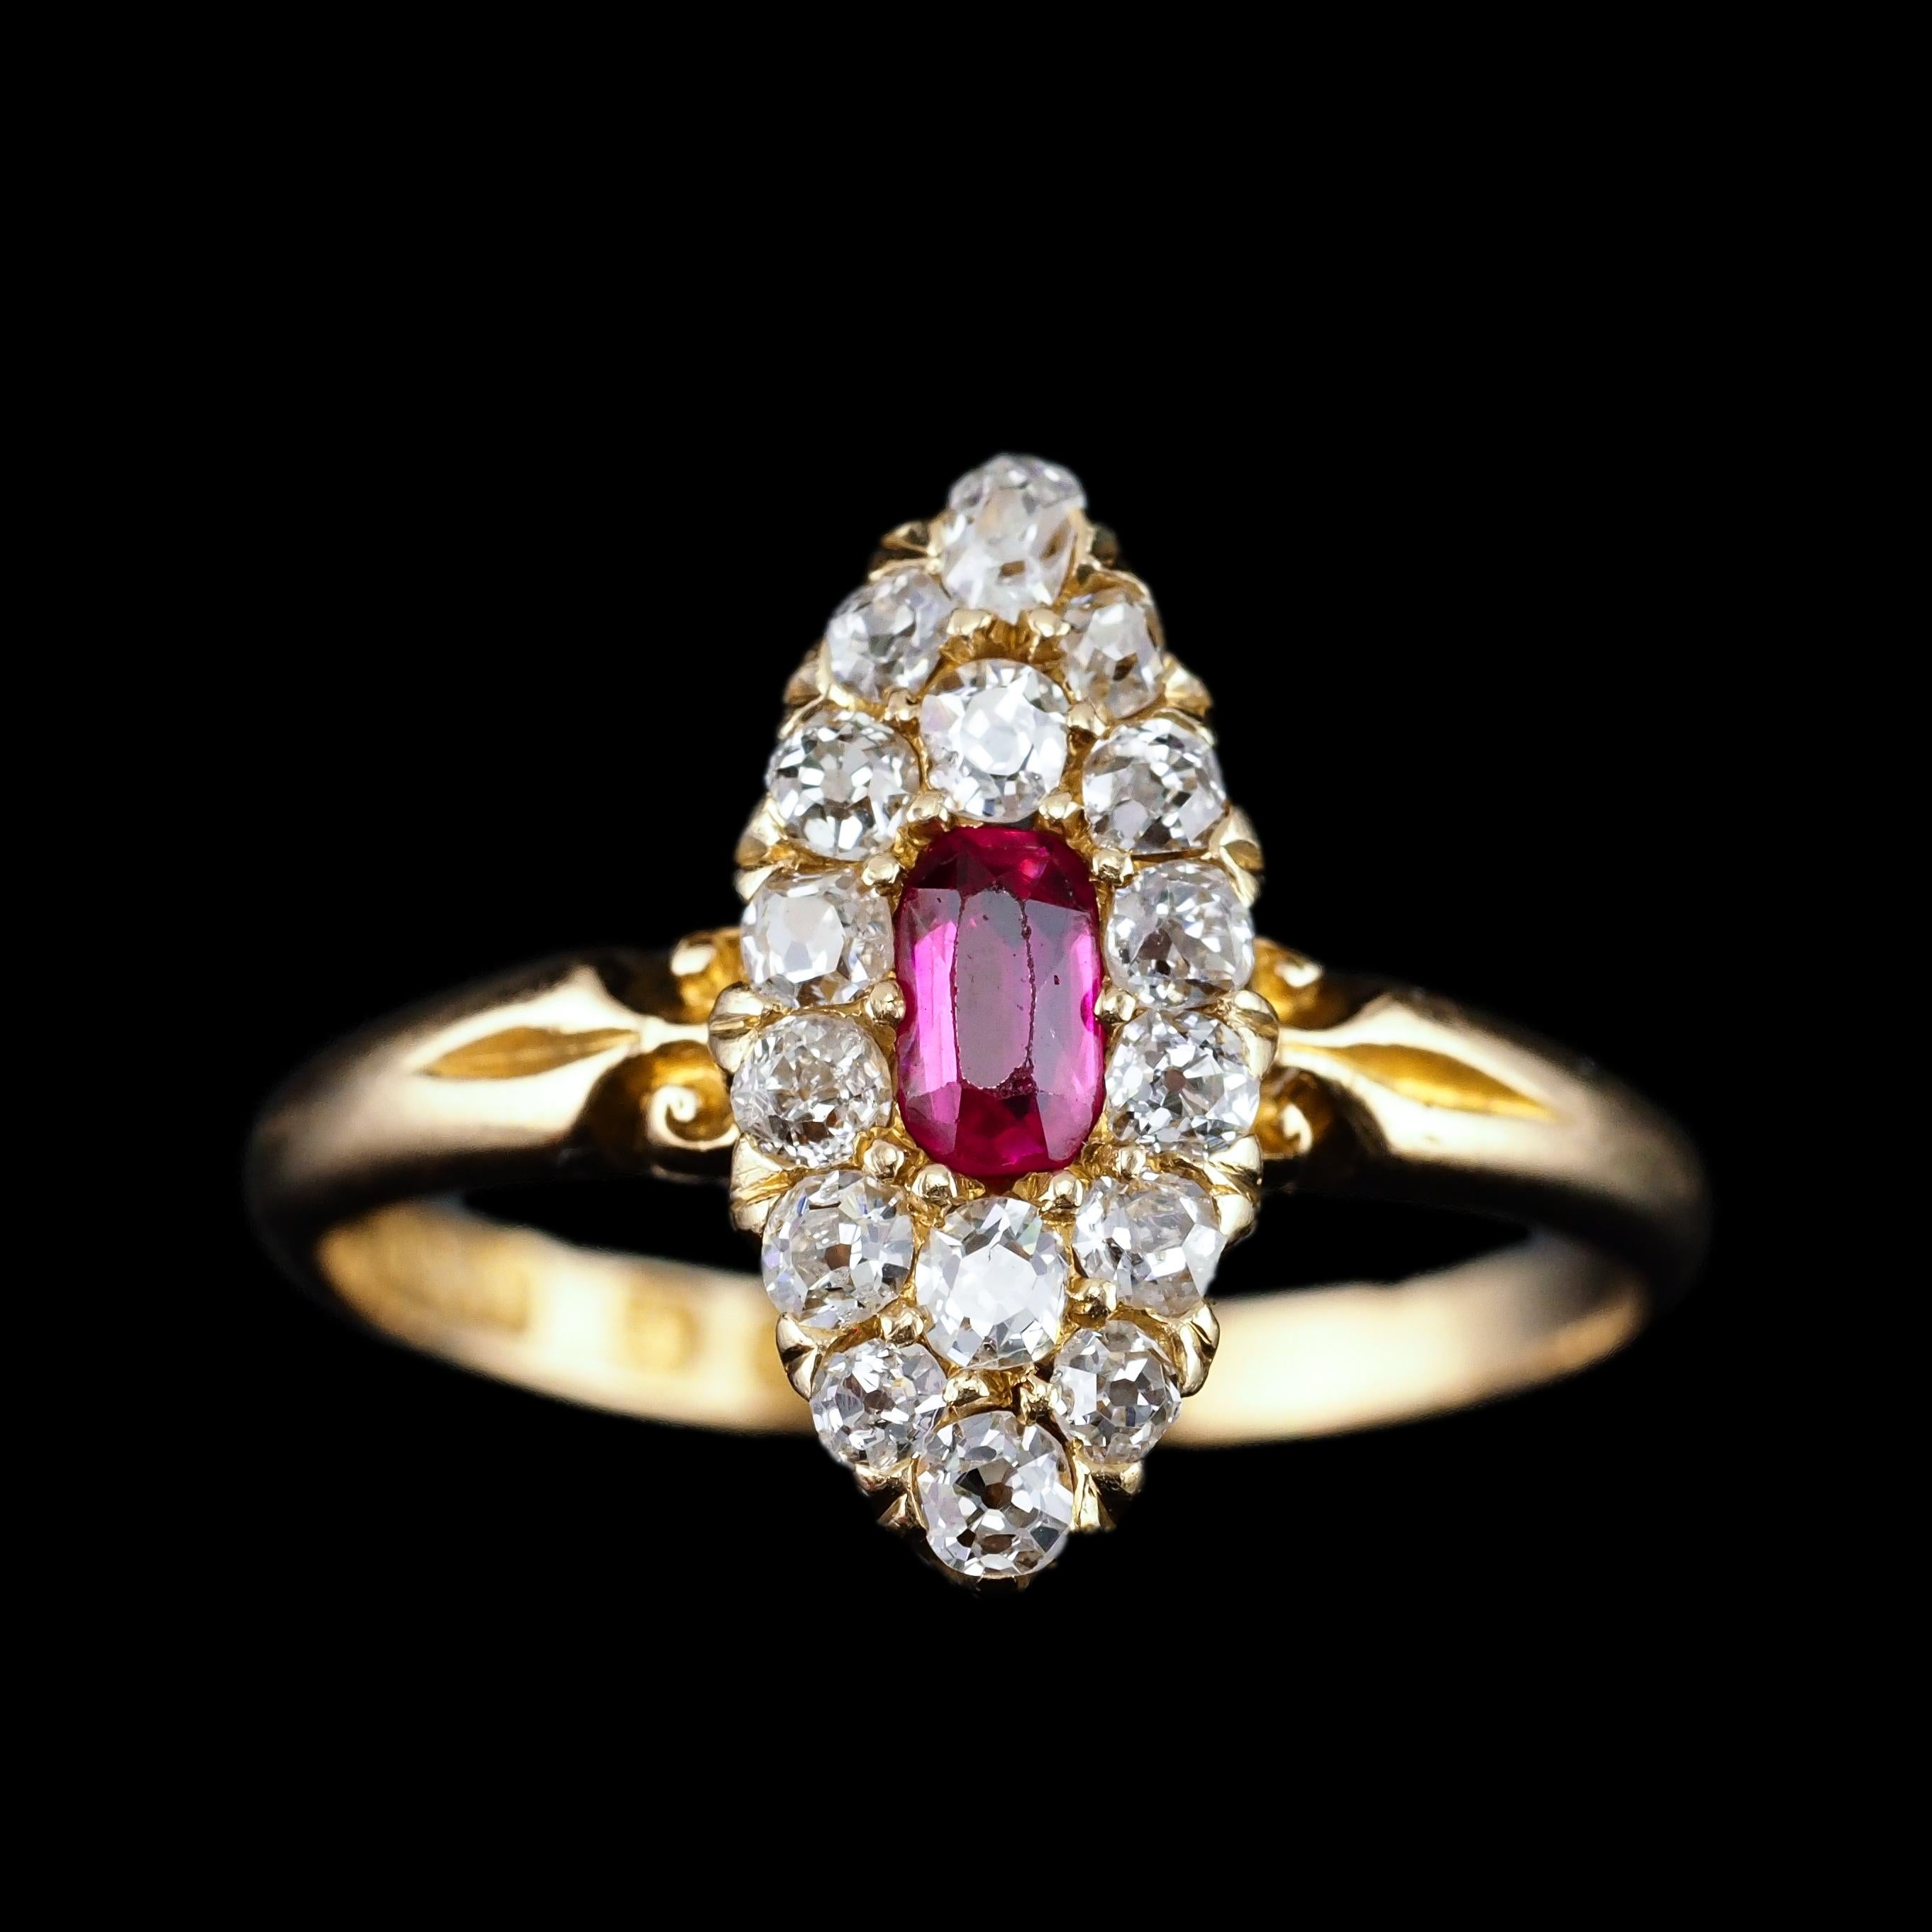 Antique Victorian Ruby & Diamond Ring 18K Gold Cluster Navette Design - 1886 For Sale 7